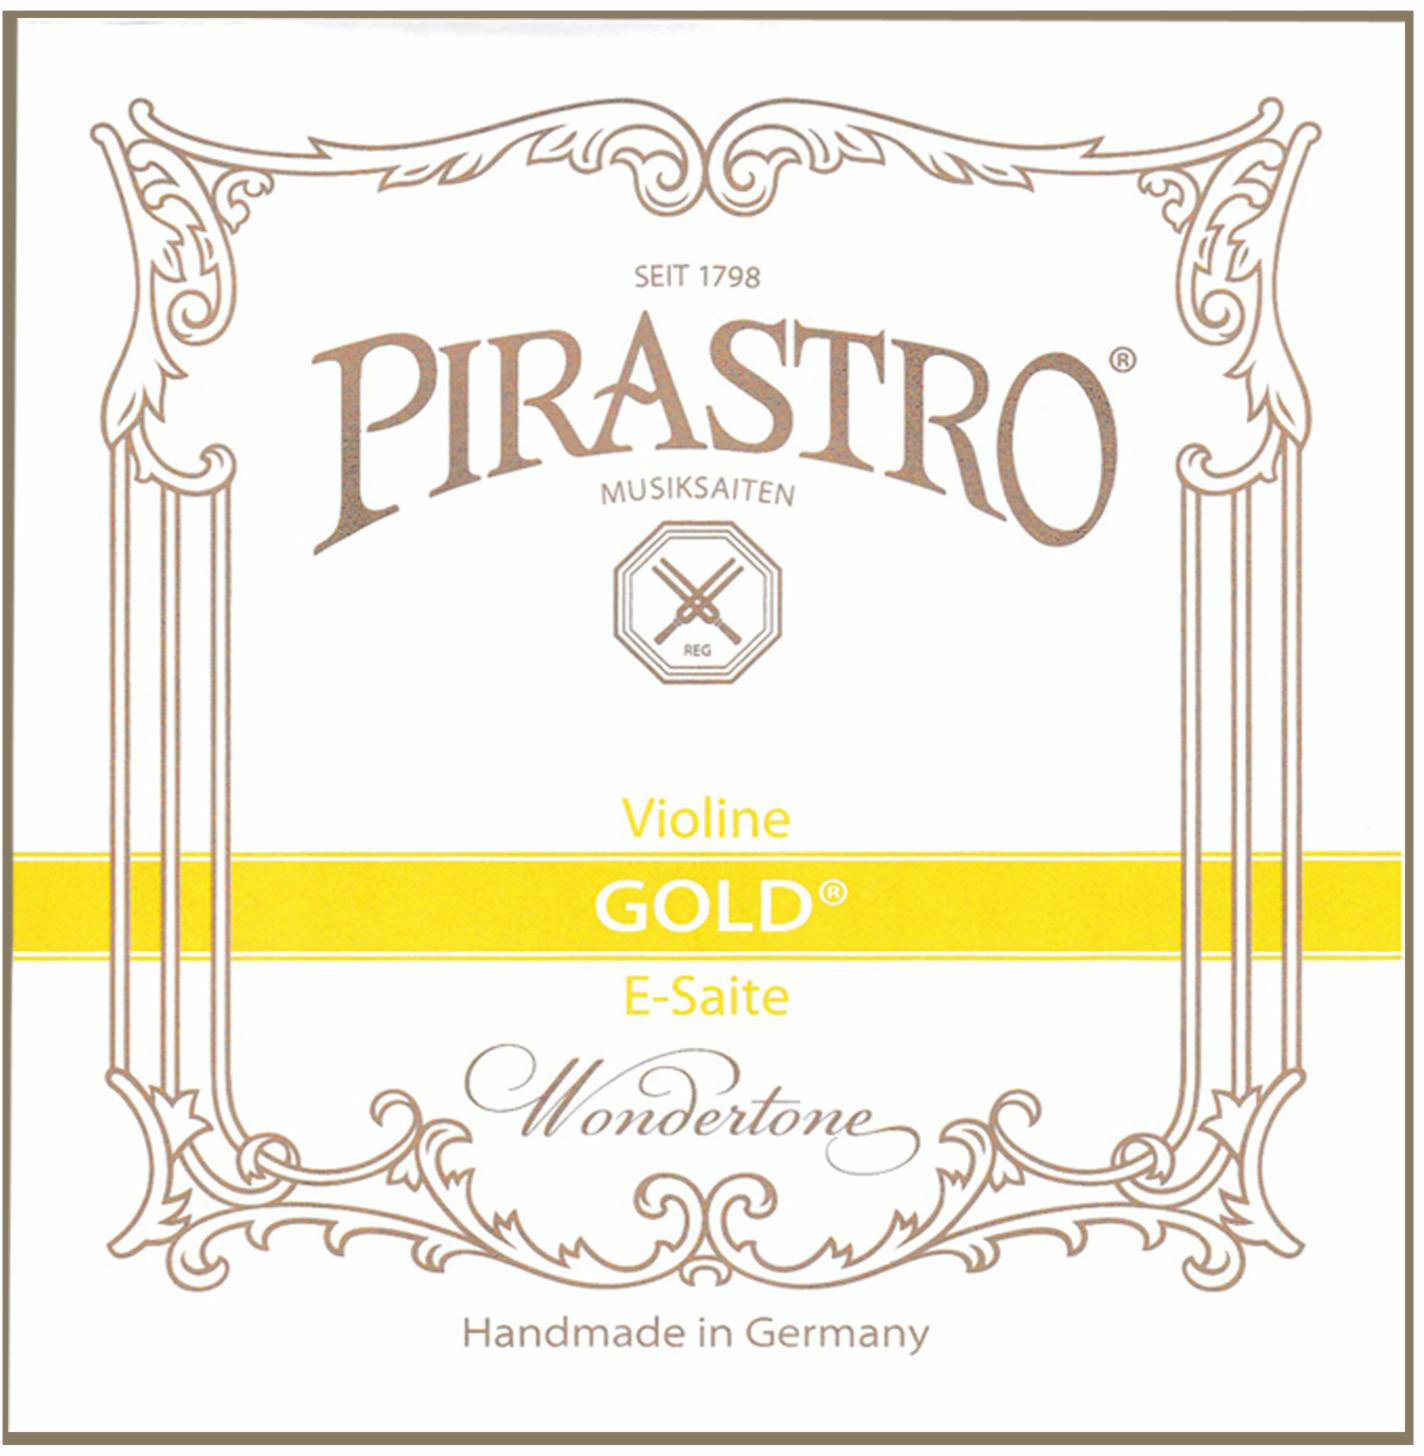 Viulun kielet Pirastro GOLD